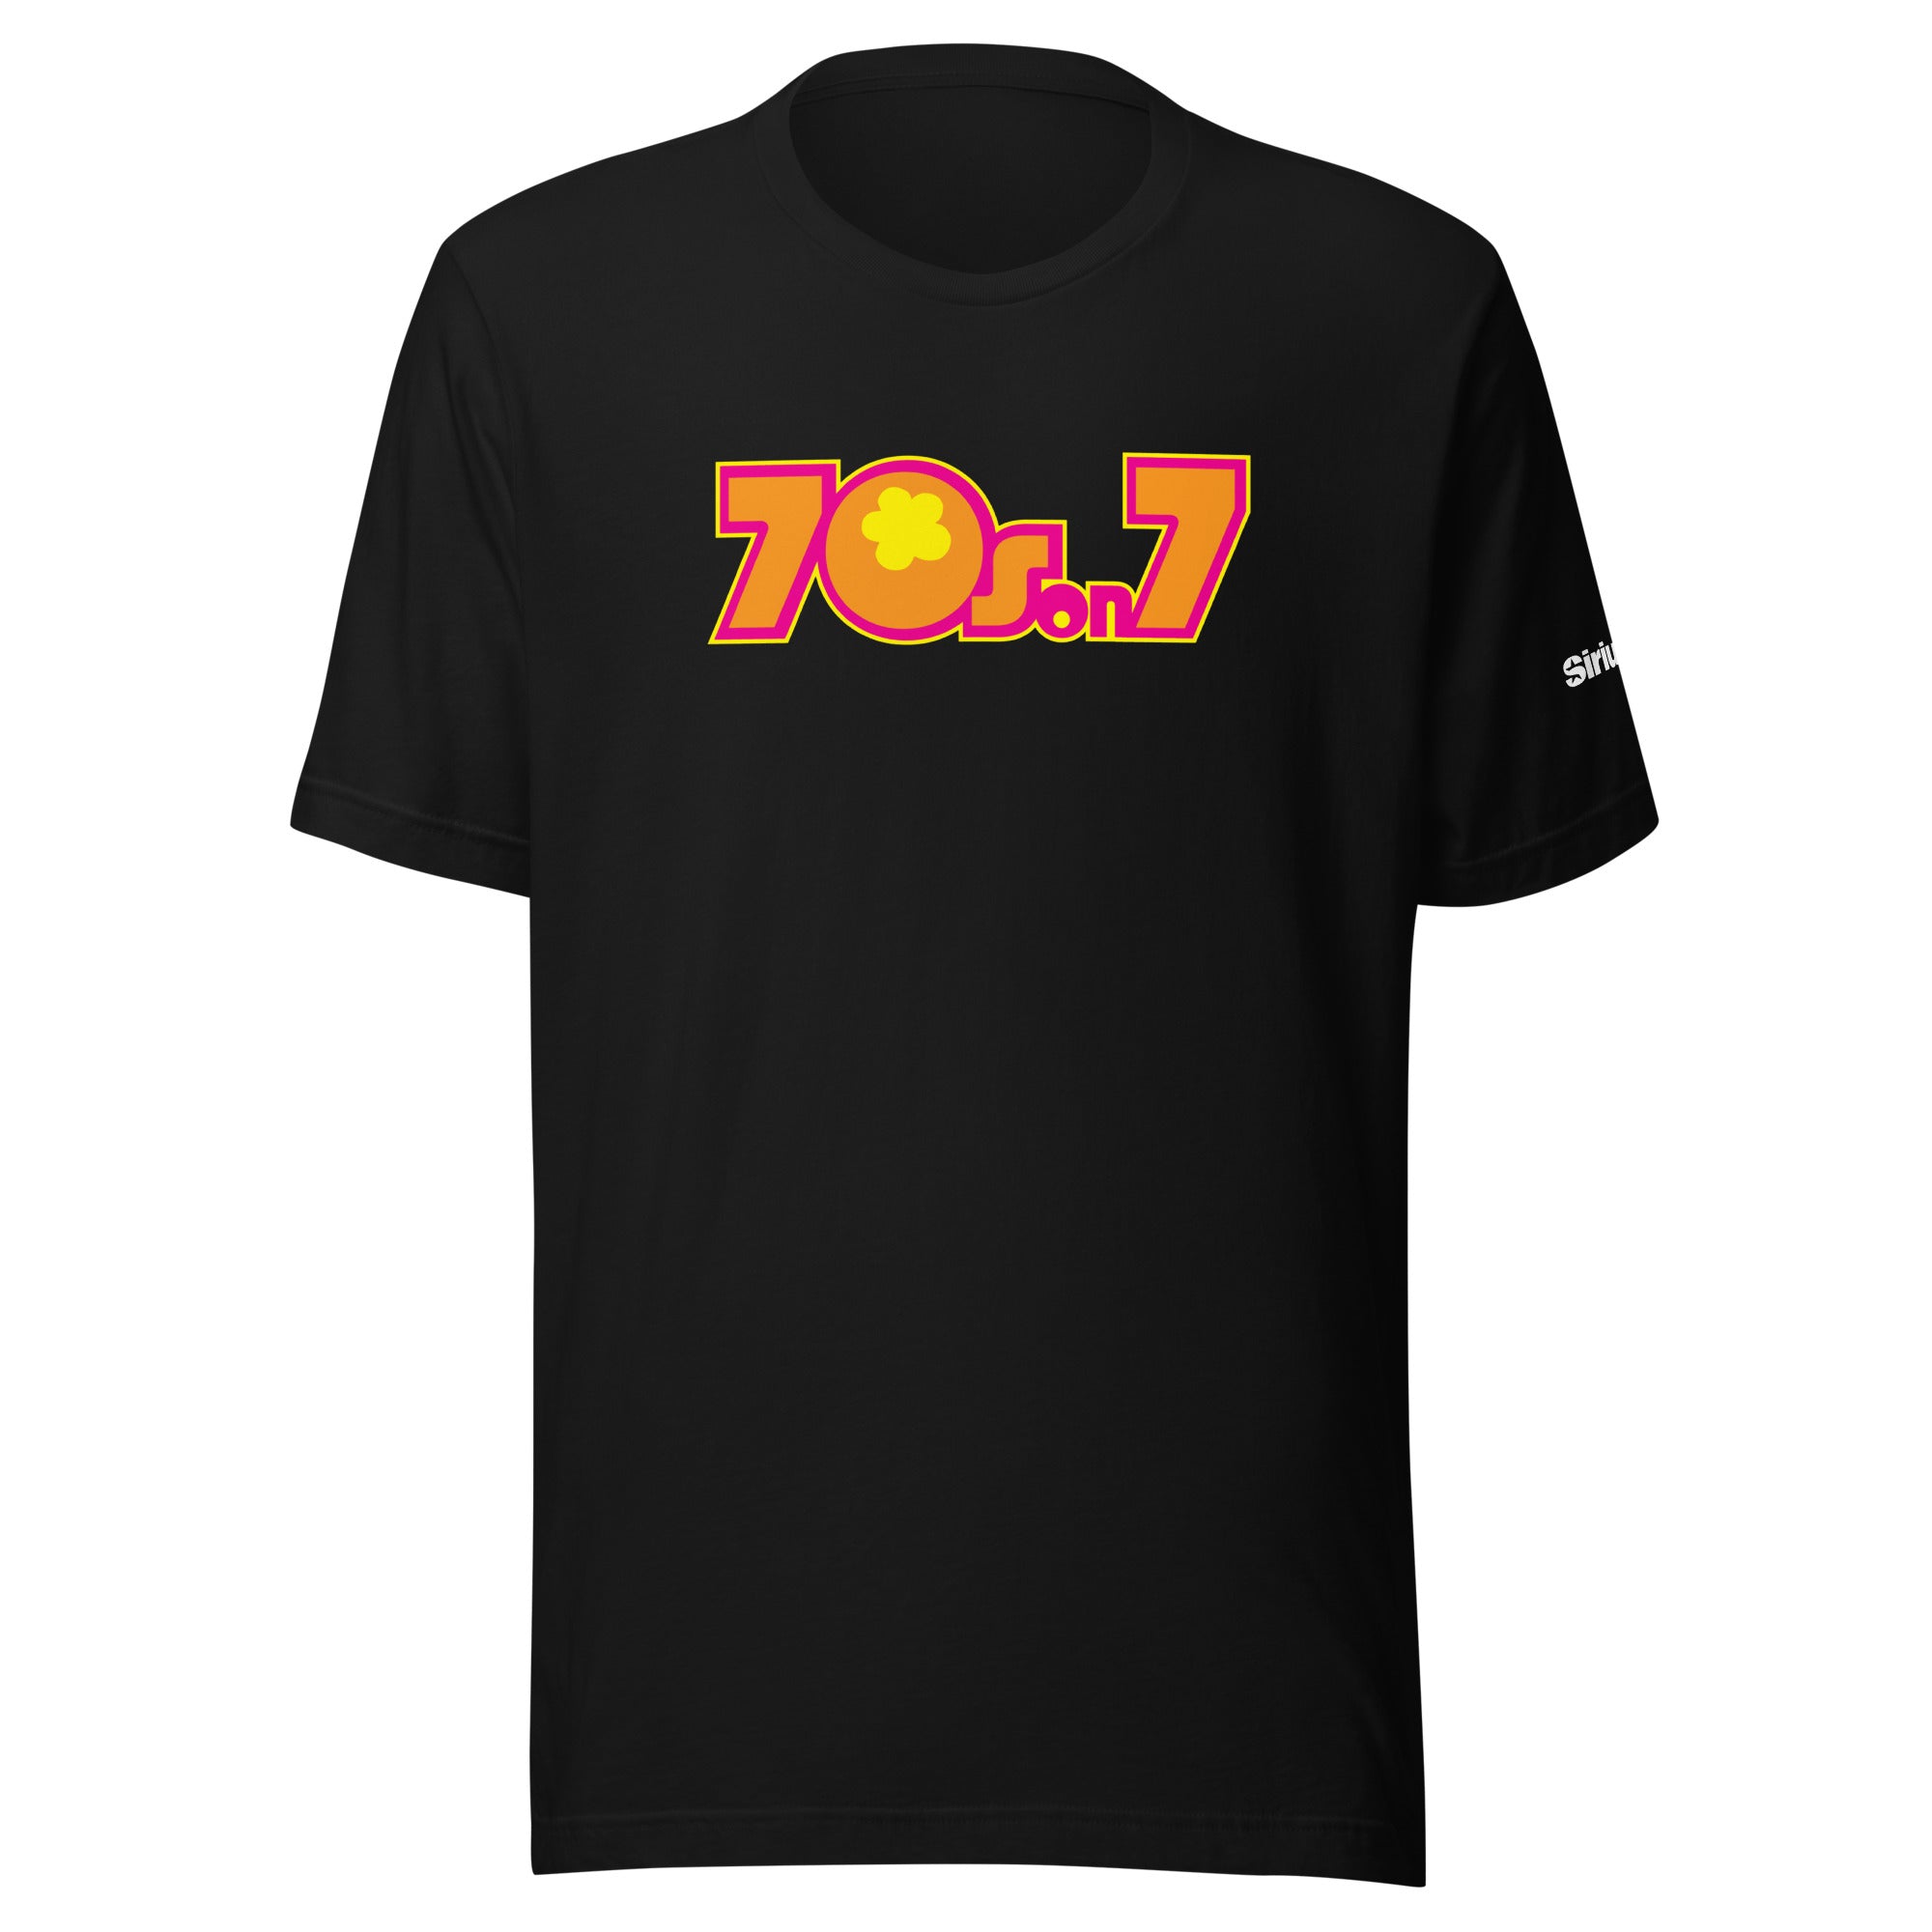 70s on 7: T-shirt (Black)